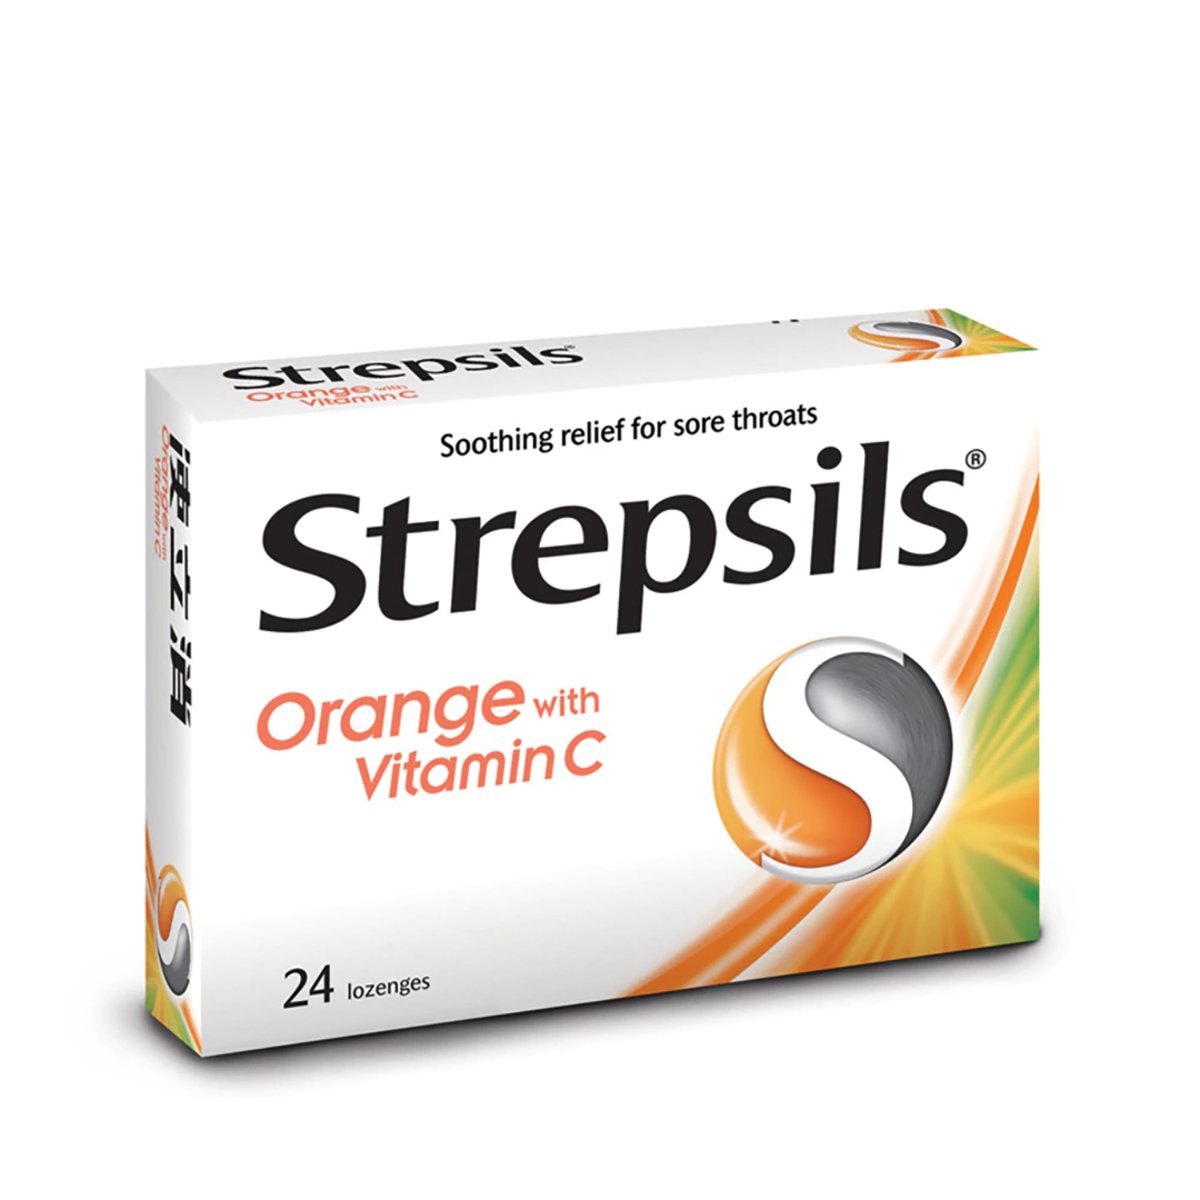 Strepsils Orange With Vitamin C 24lozenges